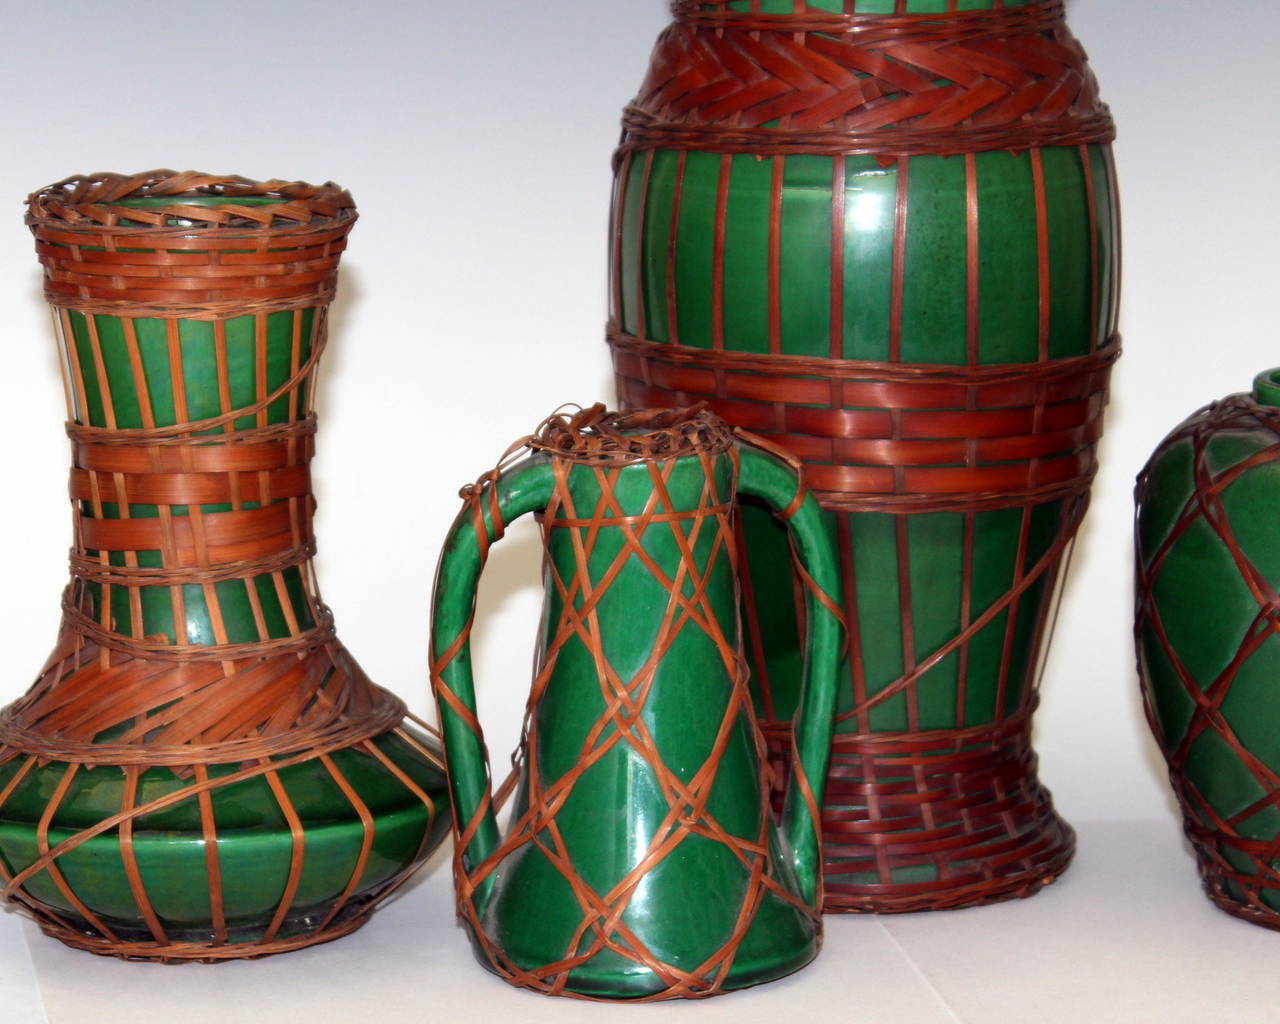 Japanese Green Arts & Crafts Awaji Pottery Vases with Bamboo Weaving